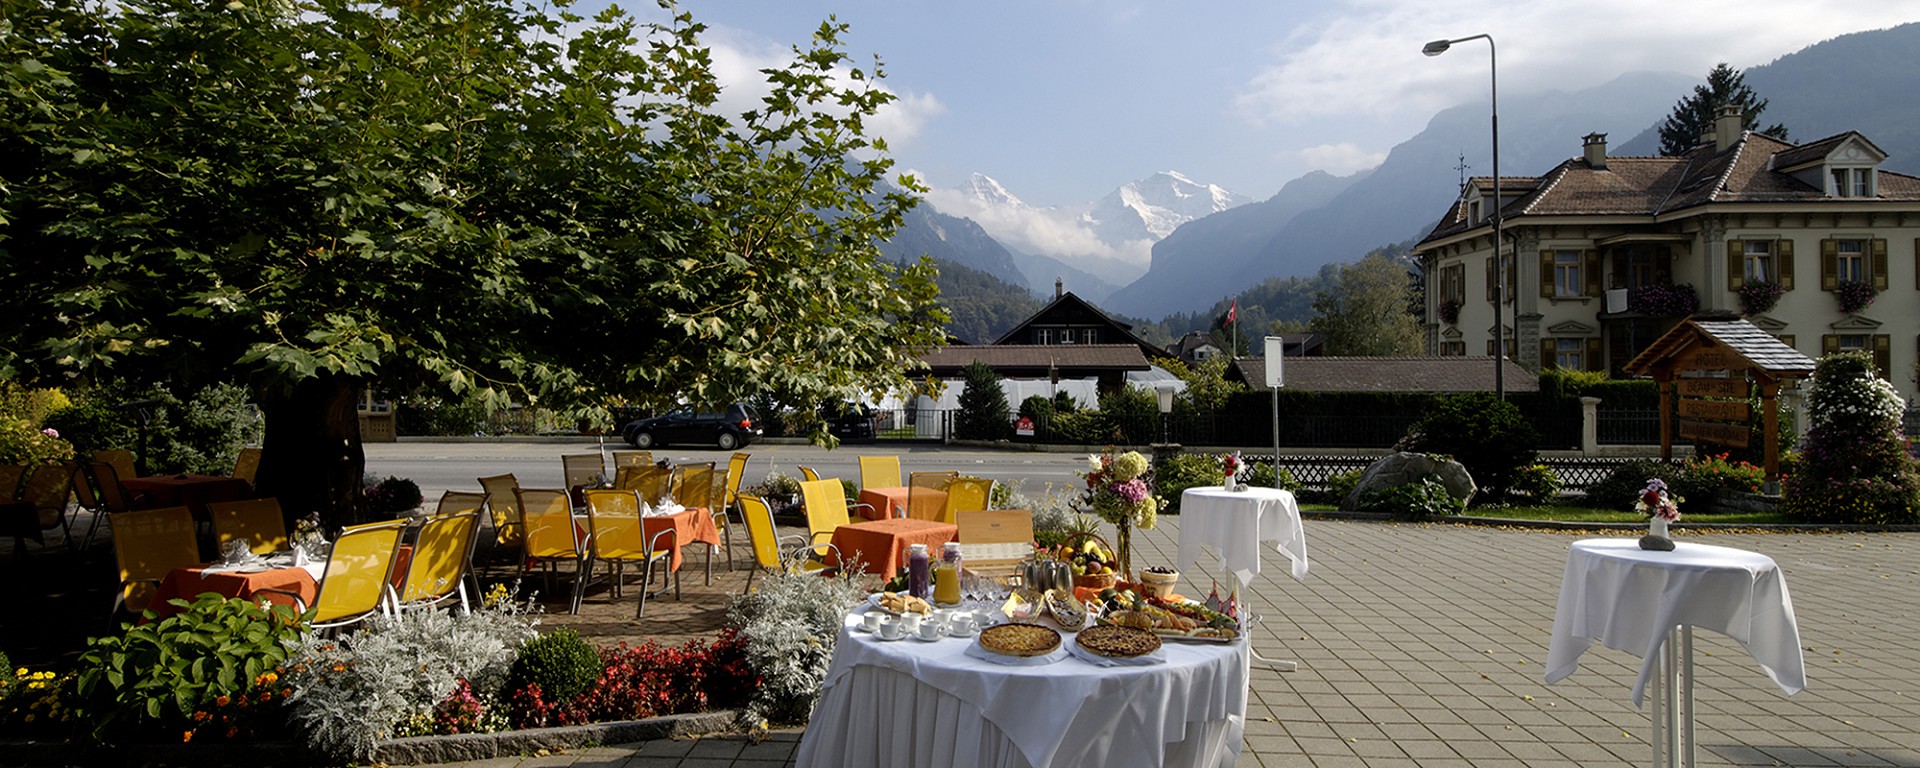 Hotel Beausite Interlaken Switzerland